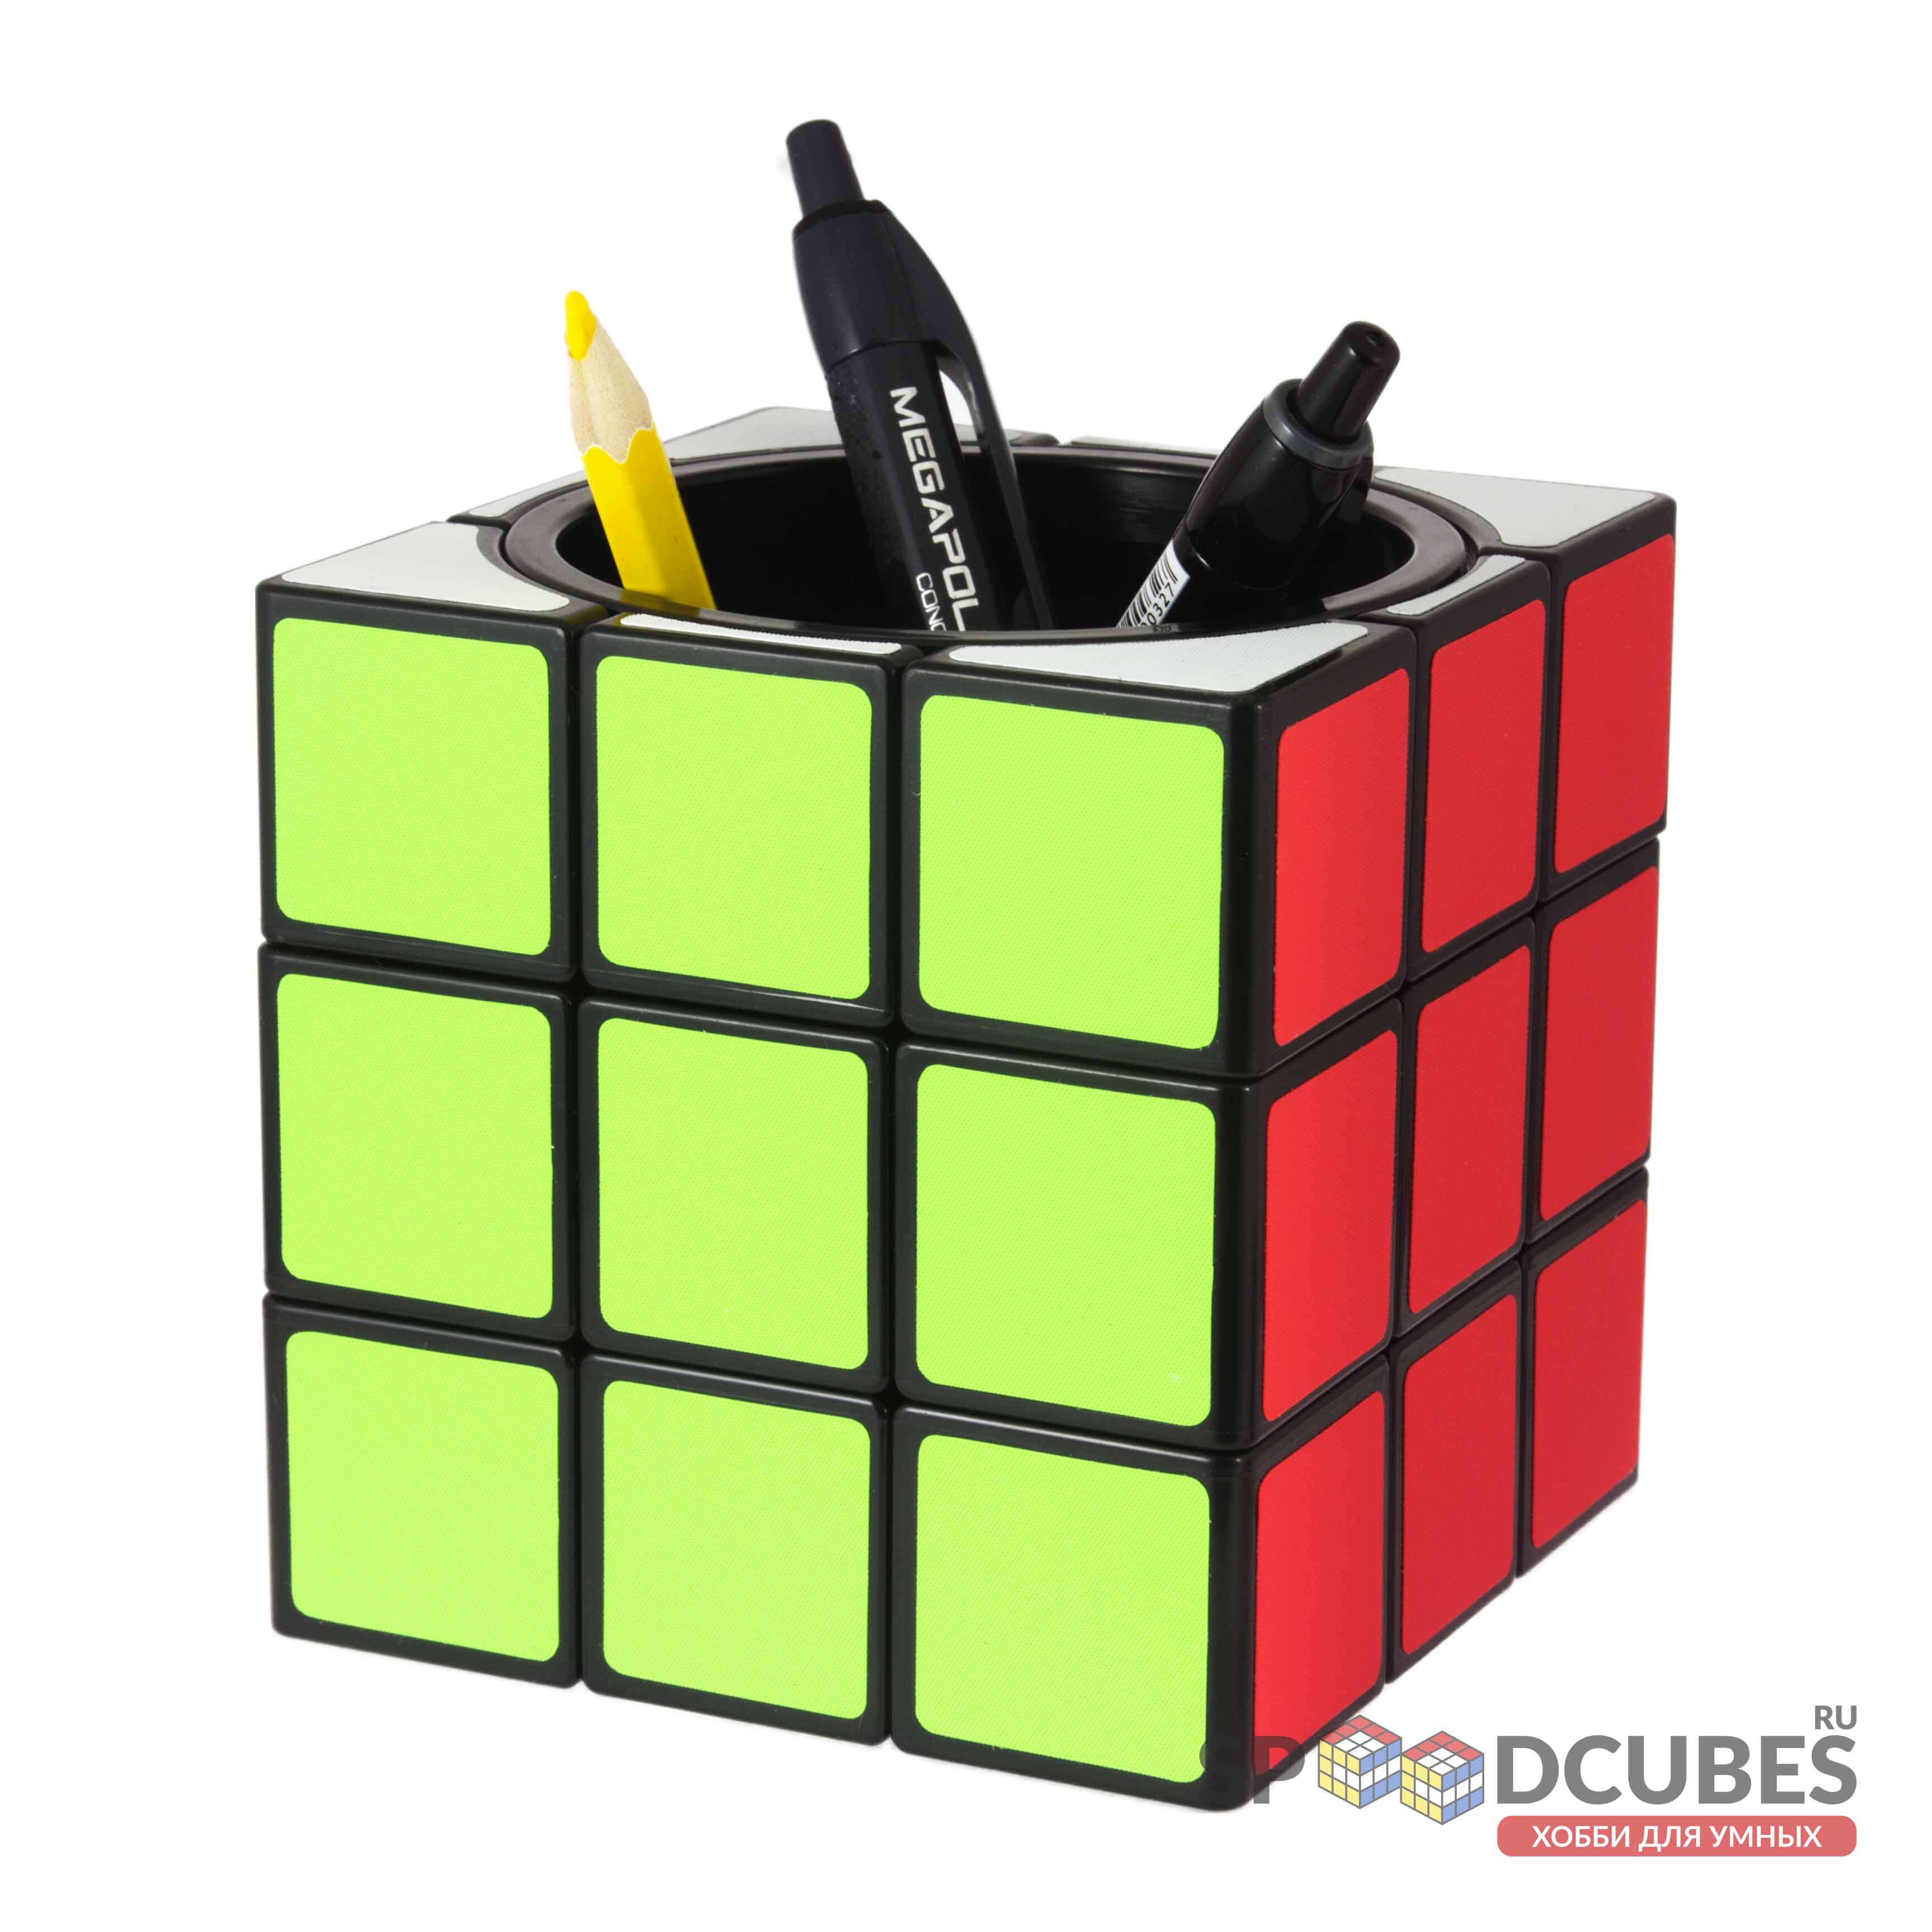 Z 3x3x3 Pen Holder Cube (органайзер)